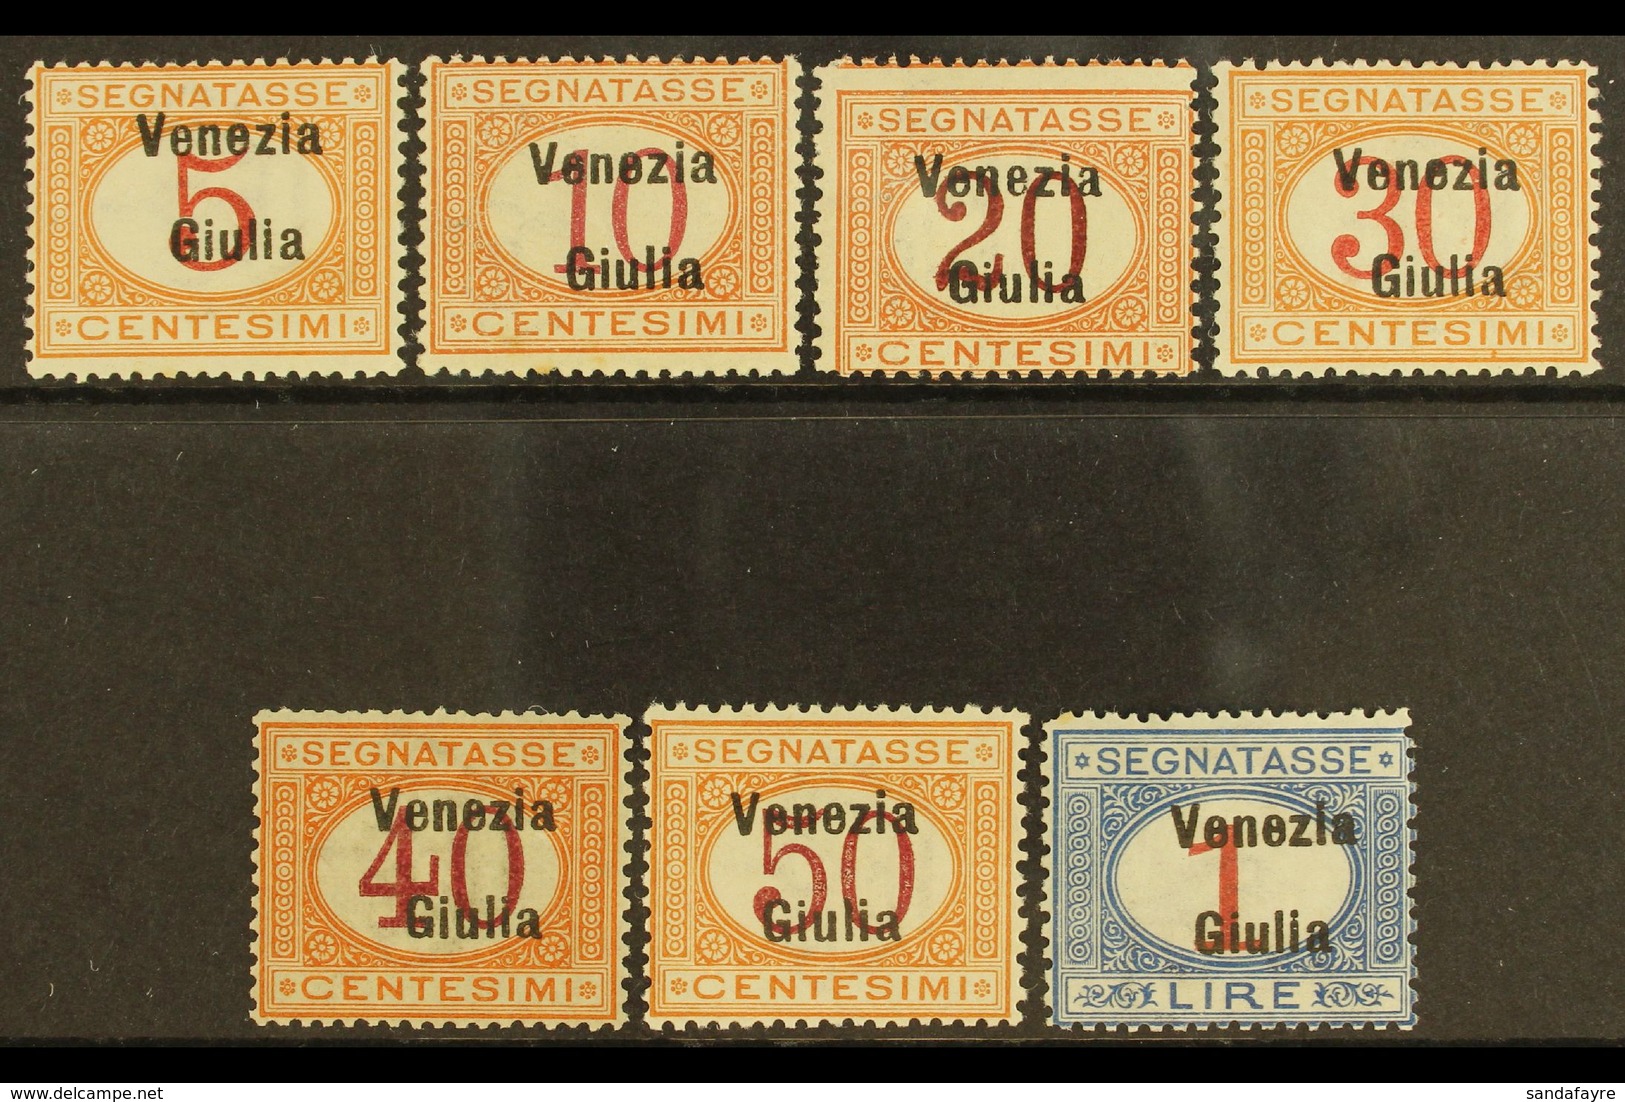 VENEZIA GIULIA  POSTAGE DUES 1918 Overprint Set Complete, Sass S4, Very Fine Mint. Cat €1000 (£760) Rare Set. (7 Stamps) - Zonder Classificatie